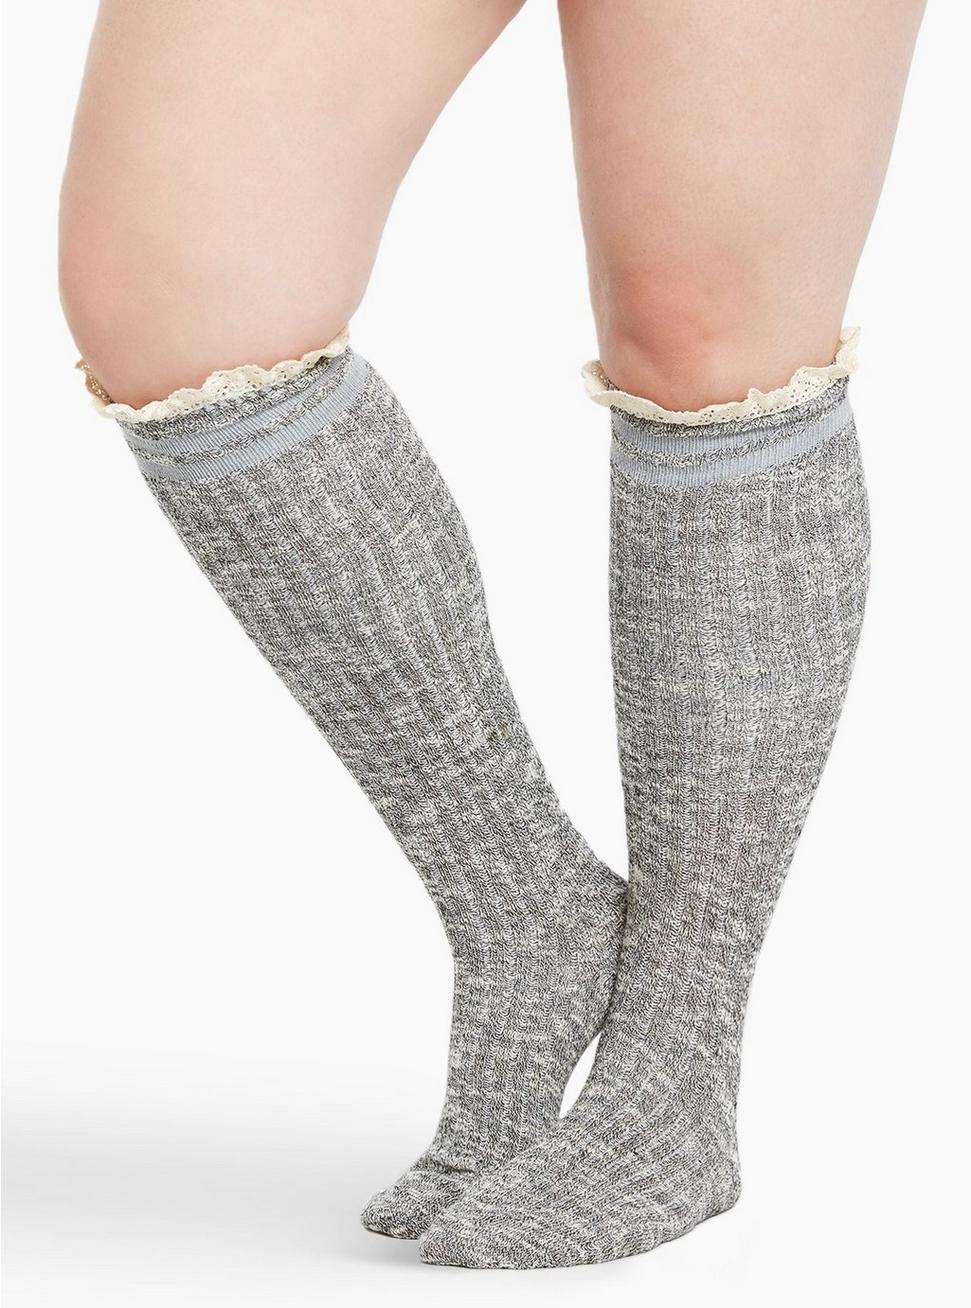 alicia mcintosh recommends torrid knee high socks pic